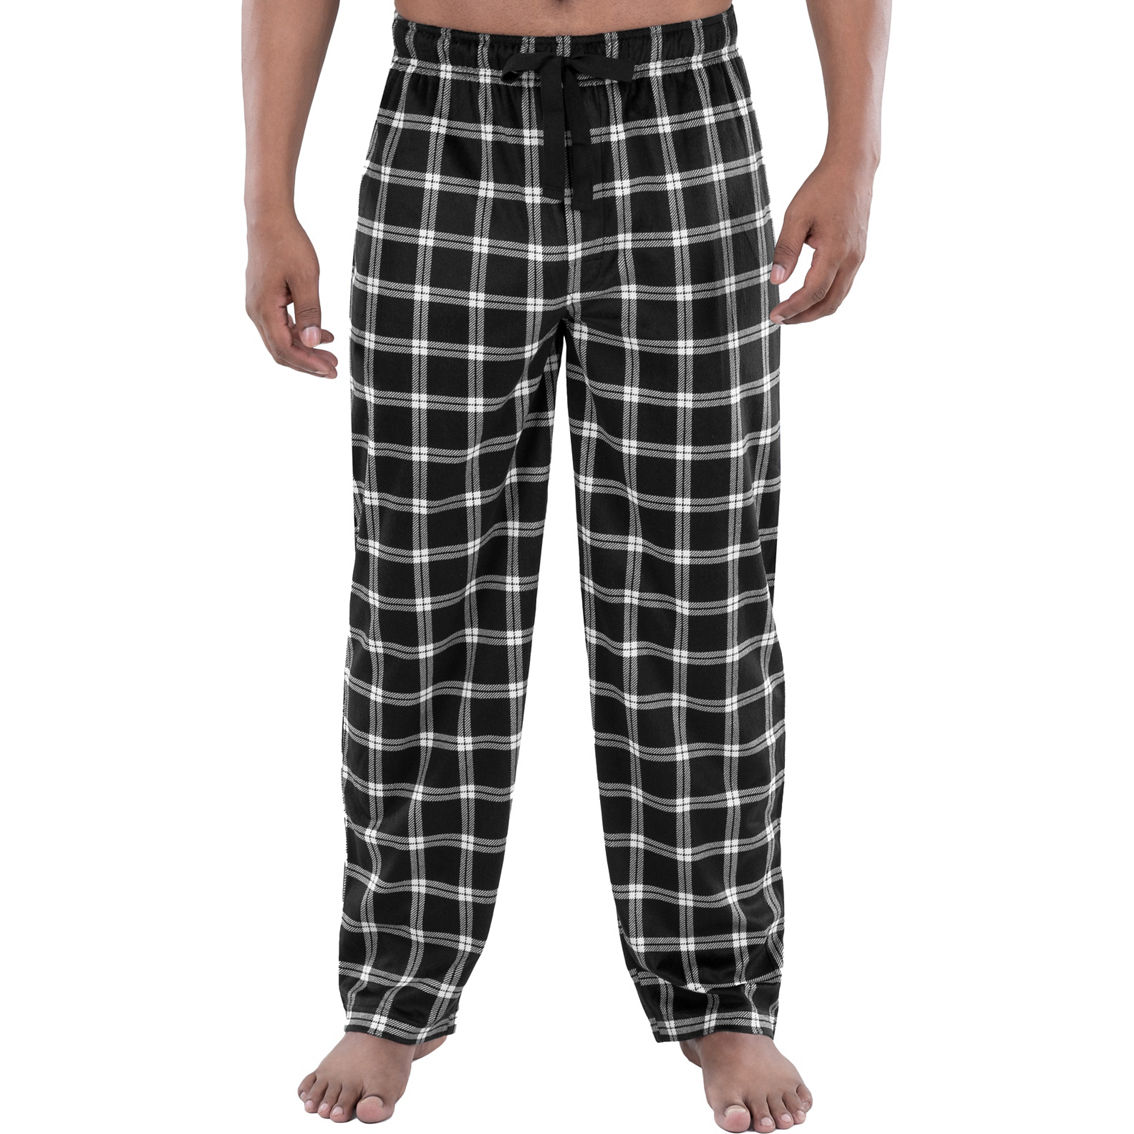 Izod Silky Fleece Sleep Pants | Pajamas & Robes | Clothing ...